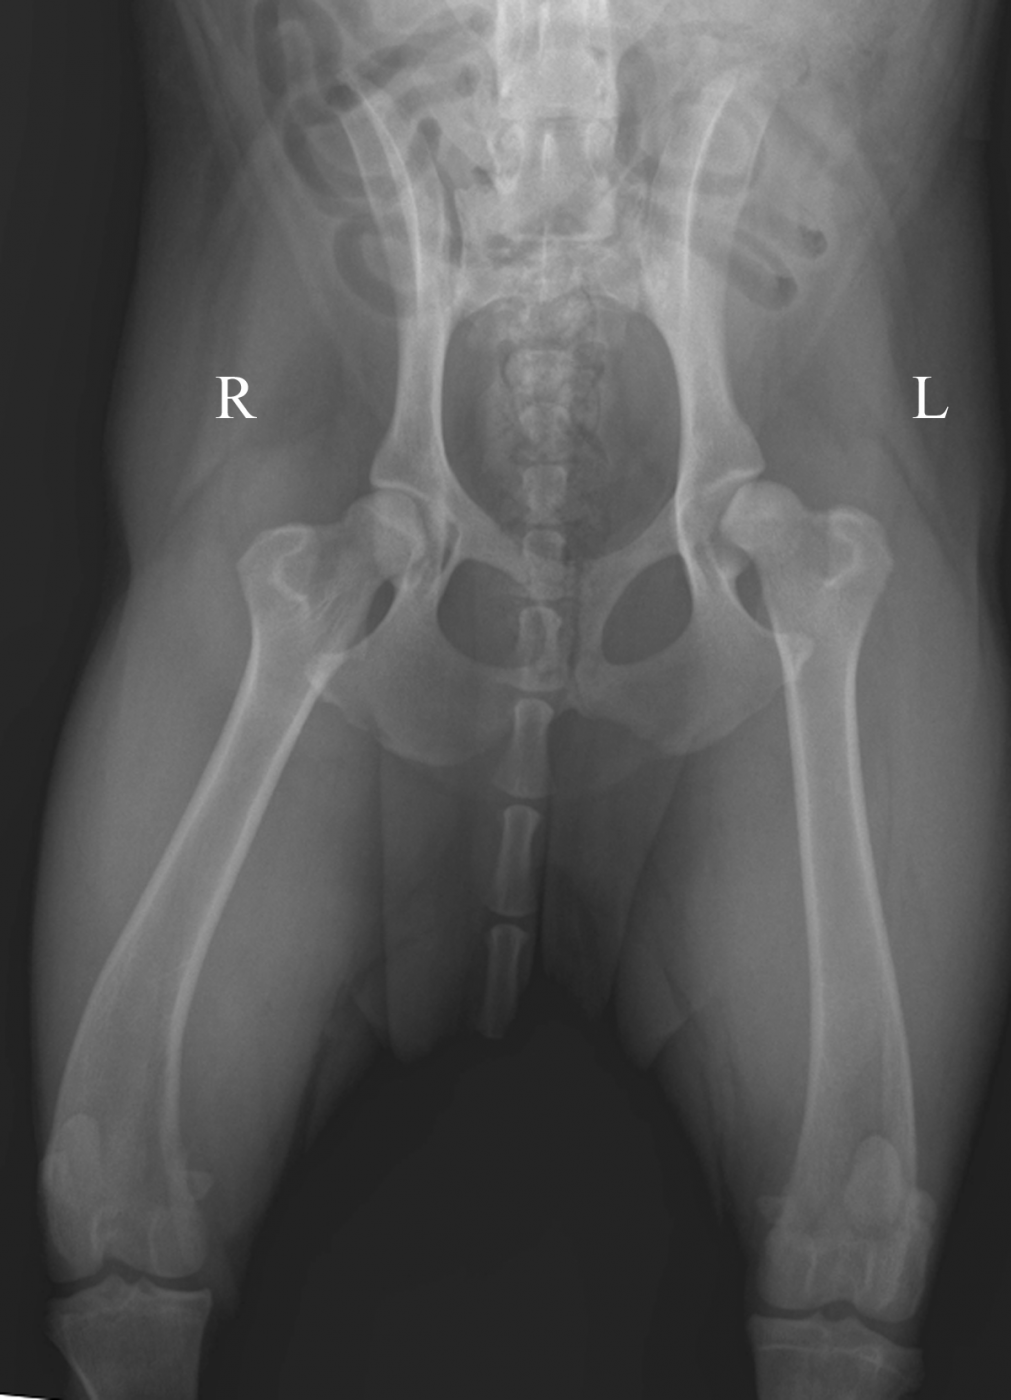 Pelvis x-ray Information